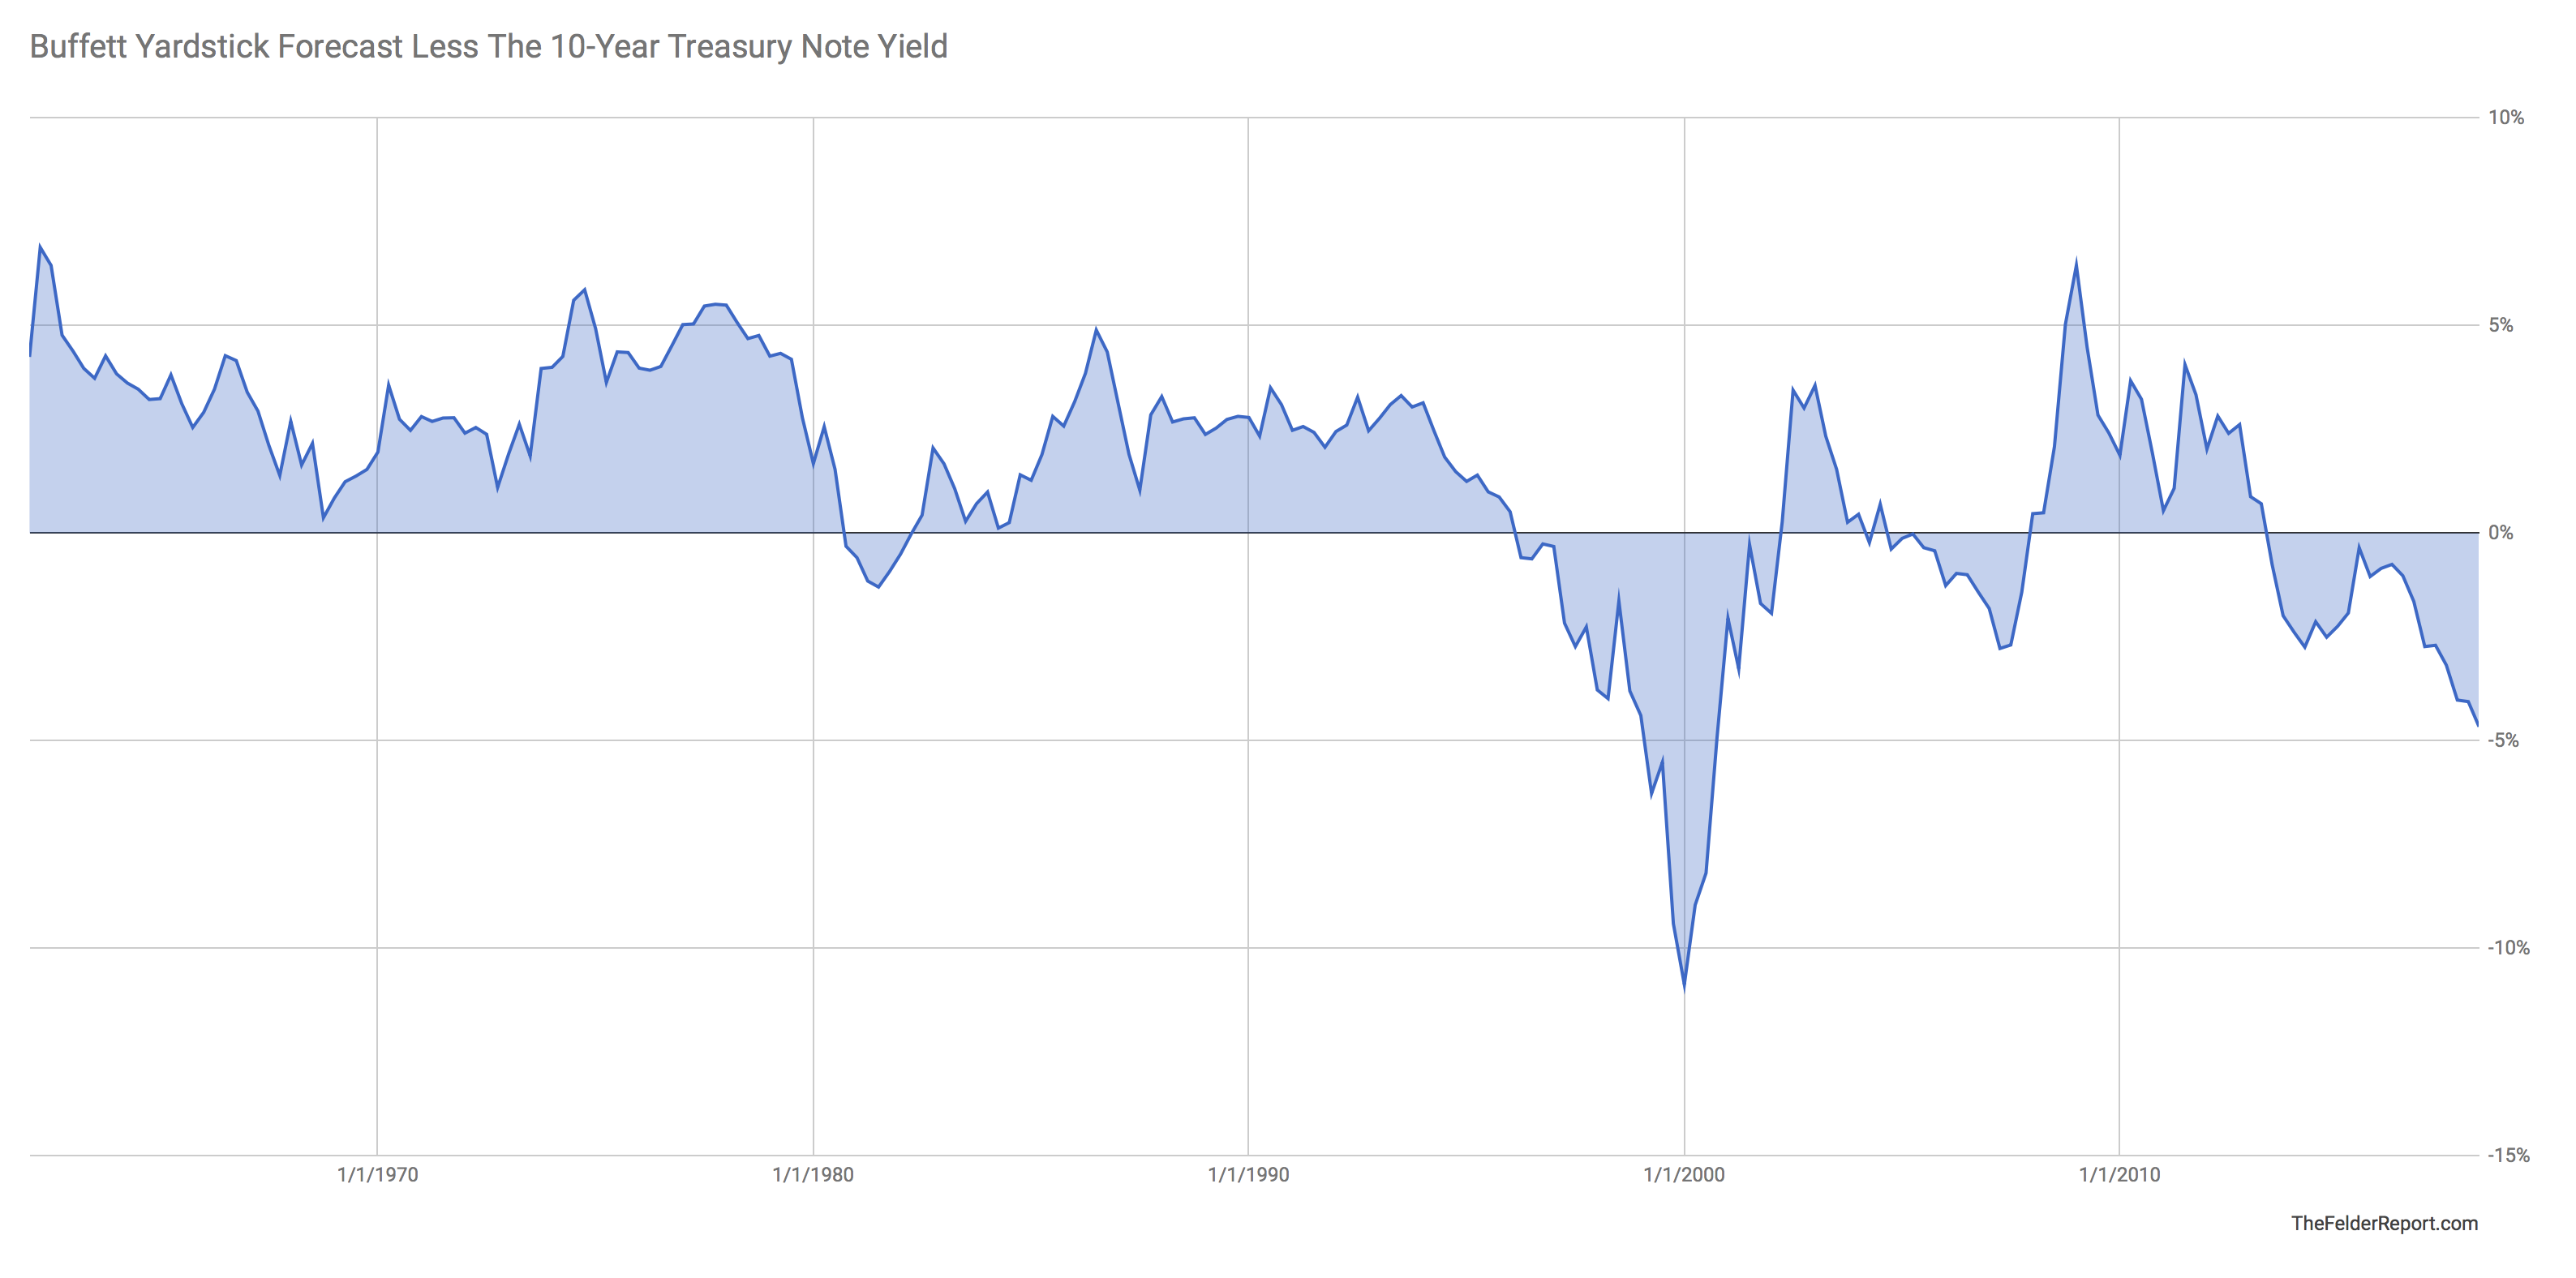 Buffett Yardstick Forecast Less The 10-Year Treasury Note Yield